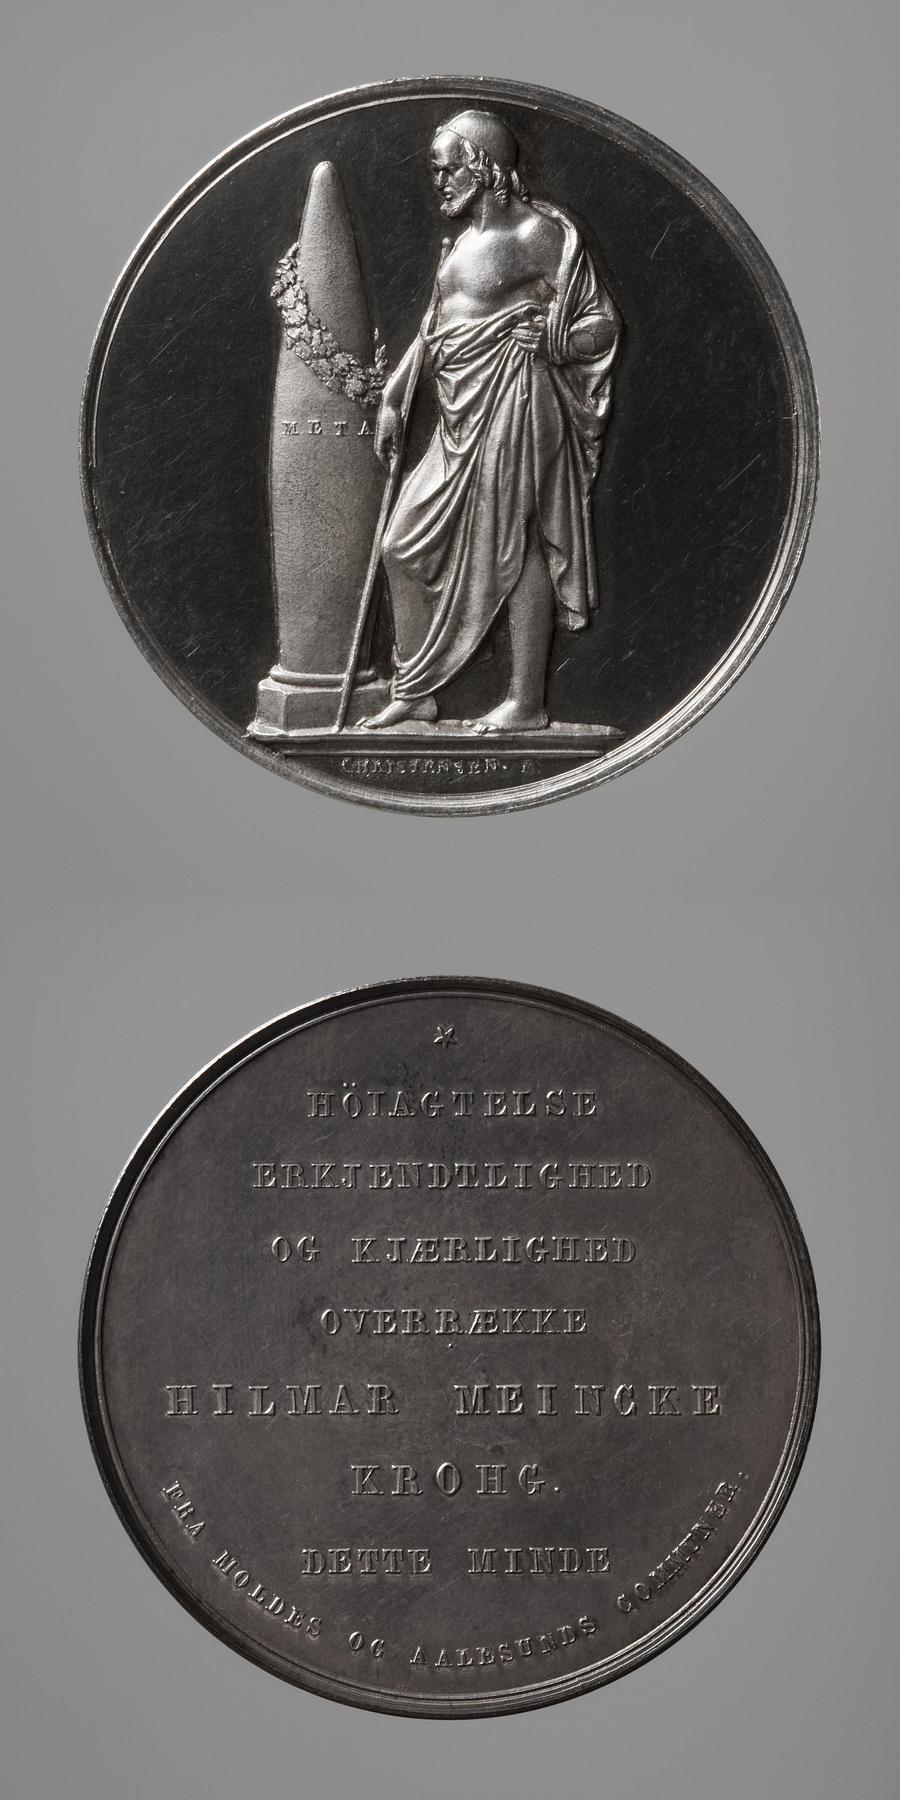 Medaljens forside: En olding stående ved målet. Medaljens bagside: Inskription, F56